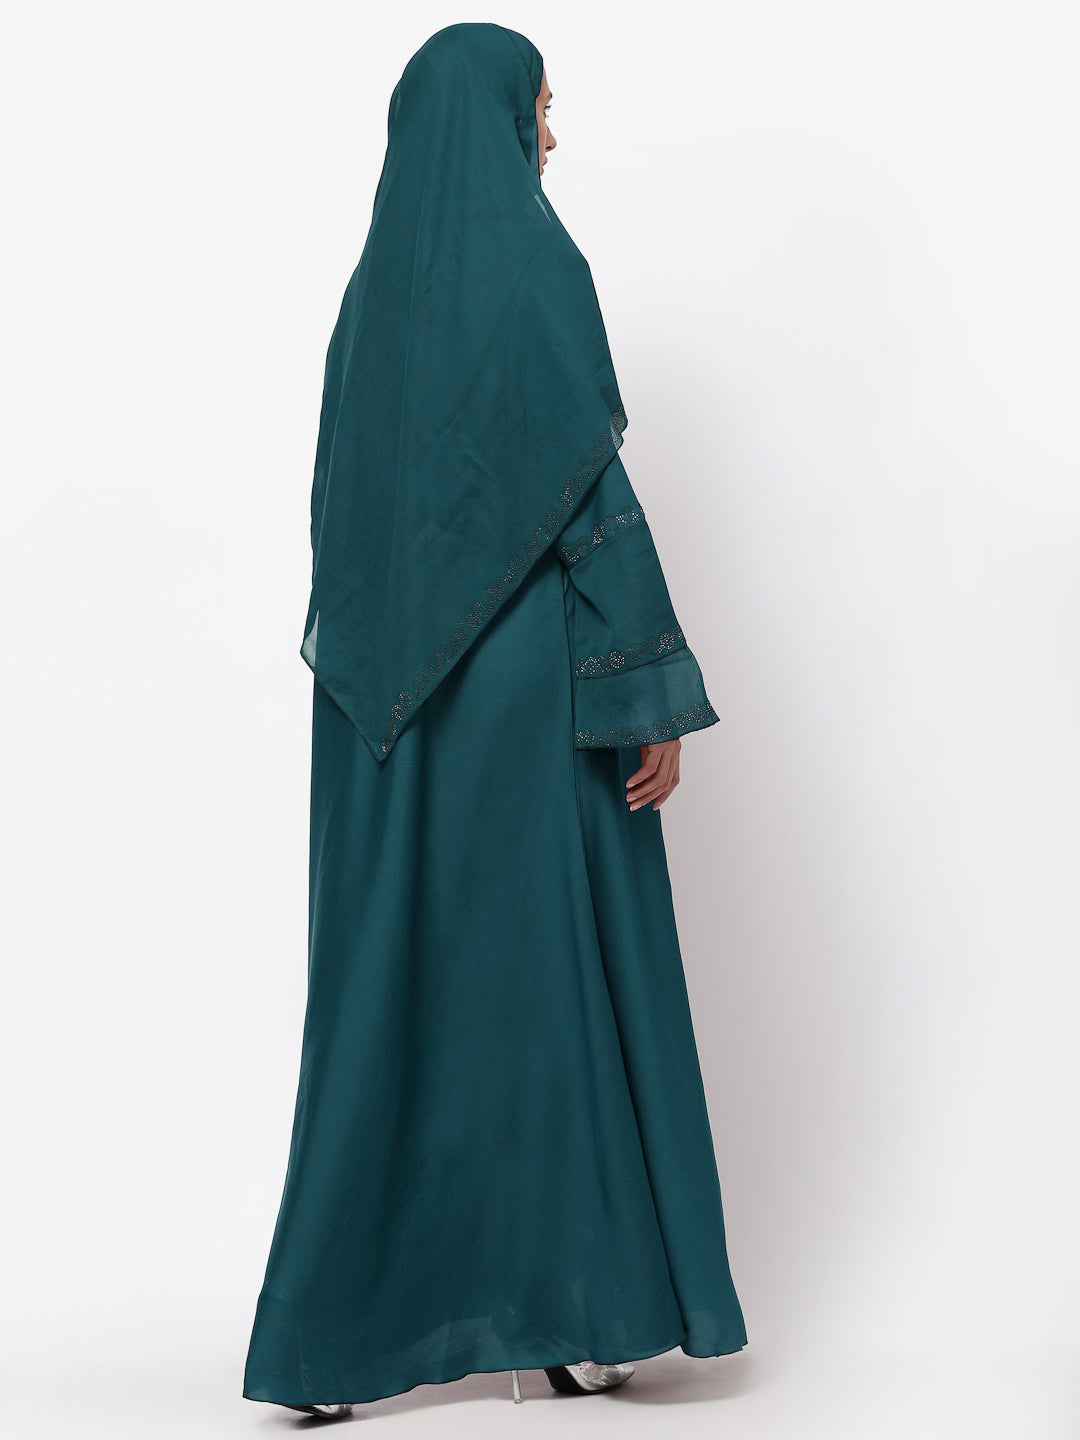 Klotthe Women Turquise Embellished Burqa With Scarves